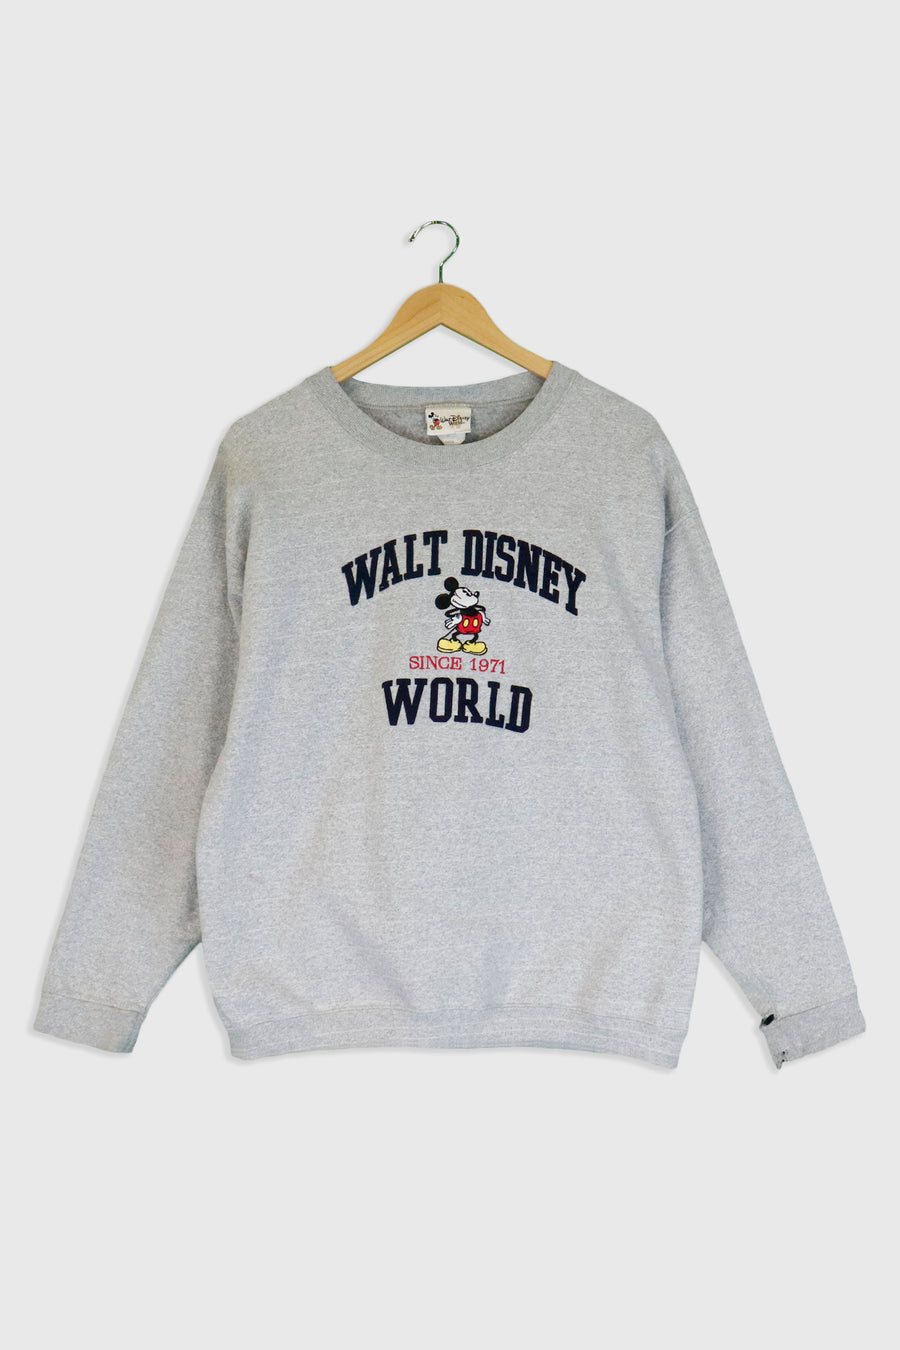 Vintage Walt Disney World 'Since 1971' Embroidered Sweatshirt Sz L